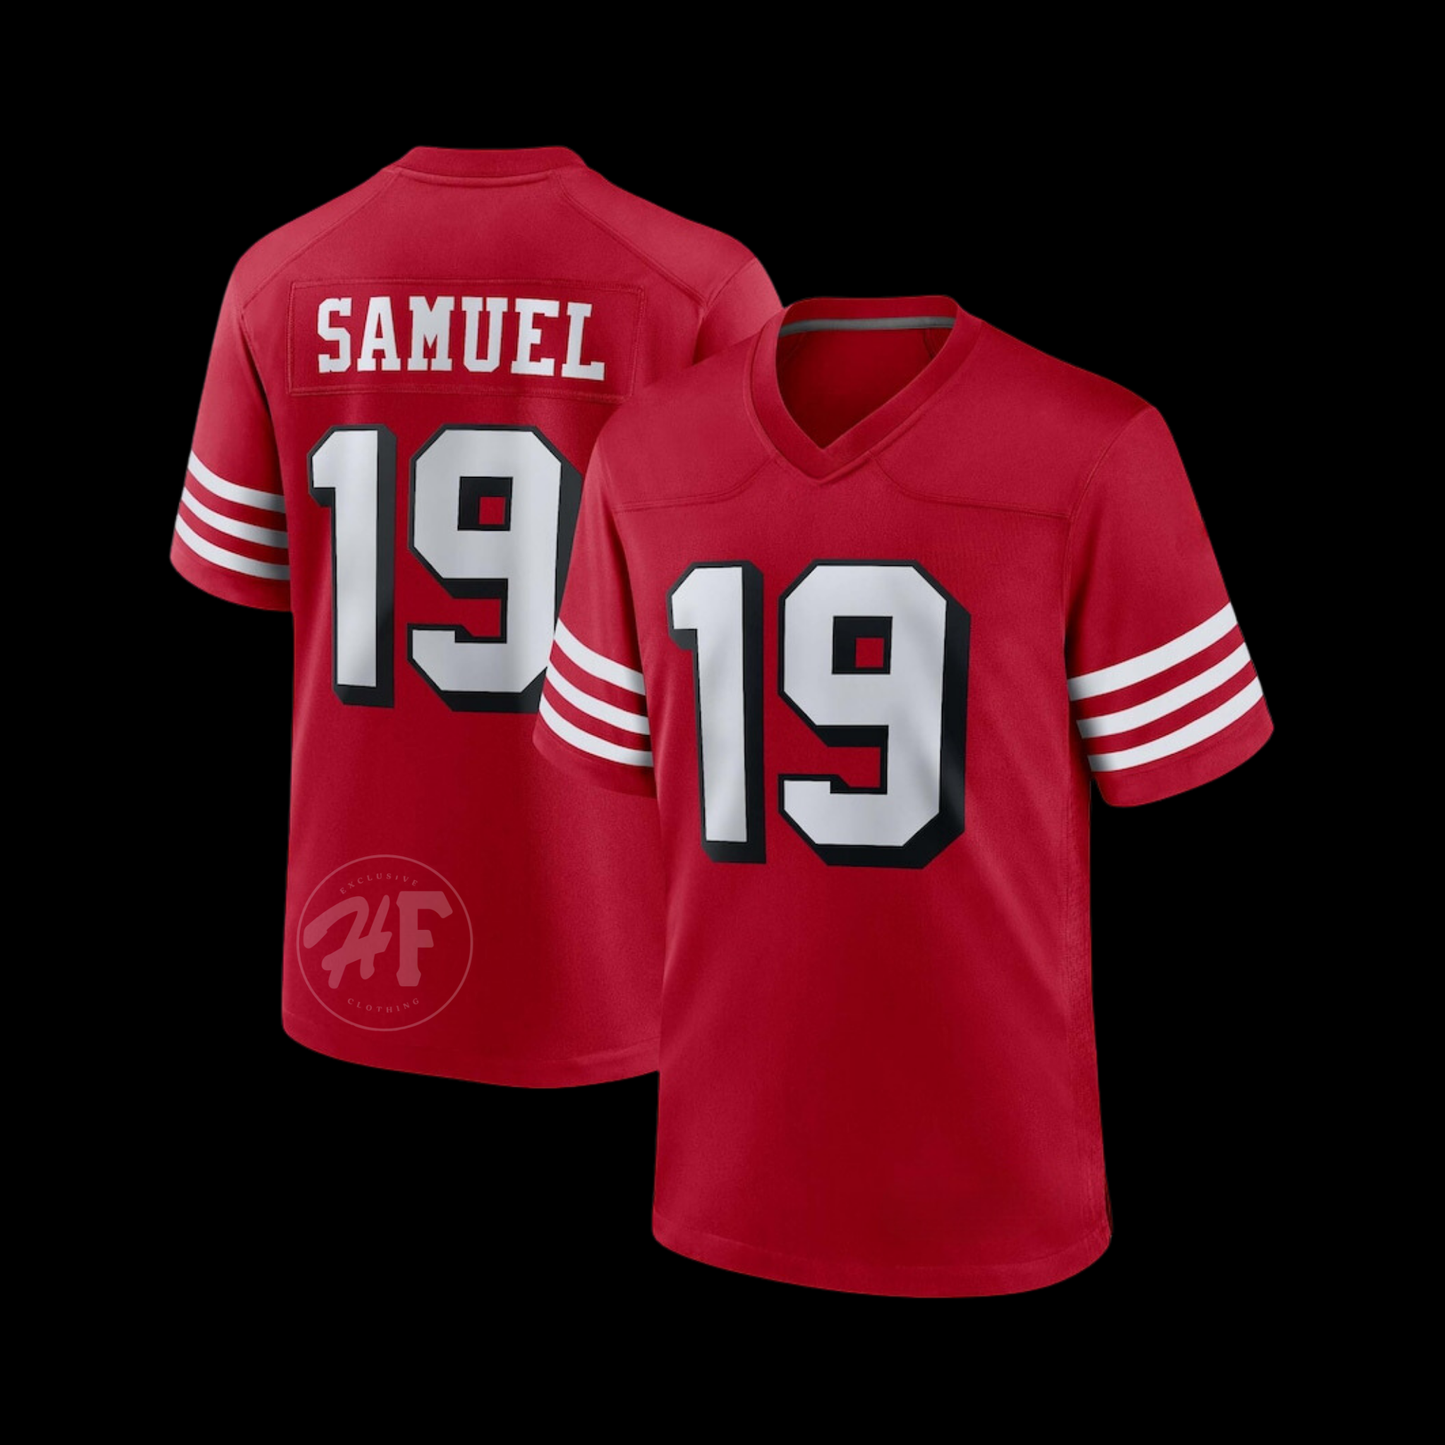 #19 DEEBO Stitched Women’s 49ers jersey